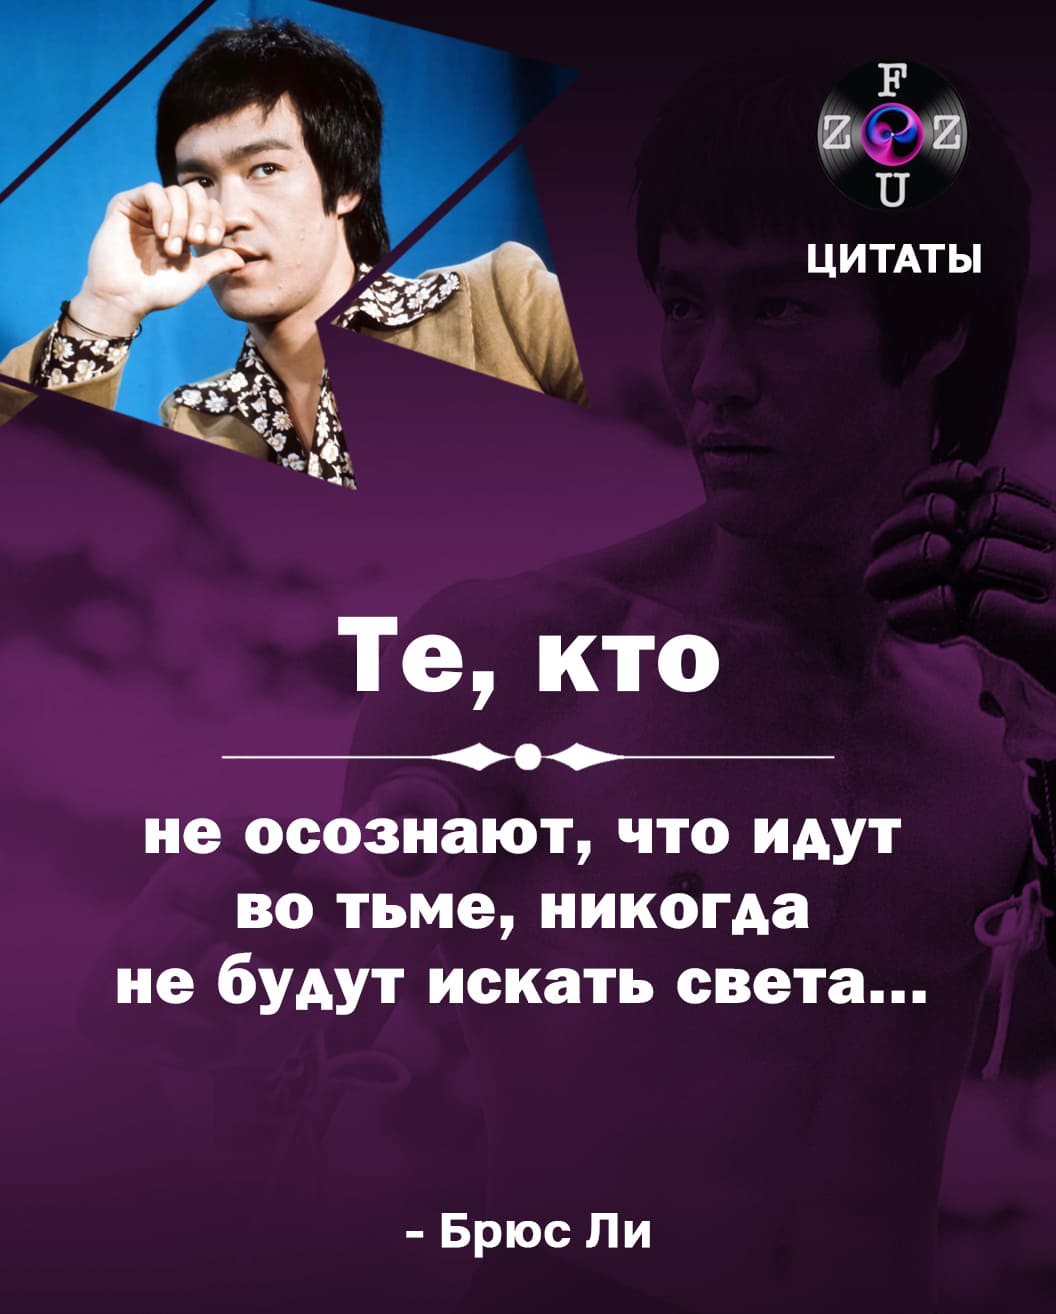 Citations fortes de Bruce Lee